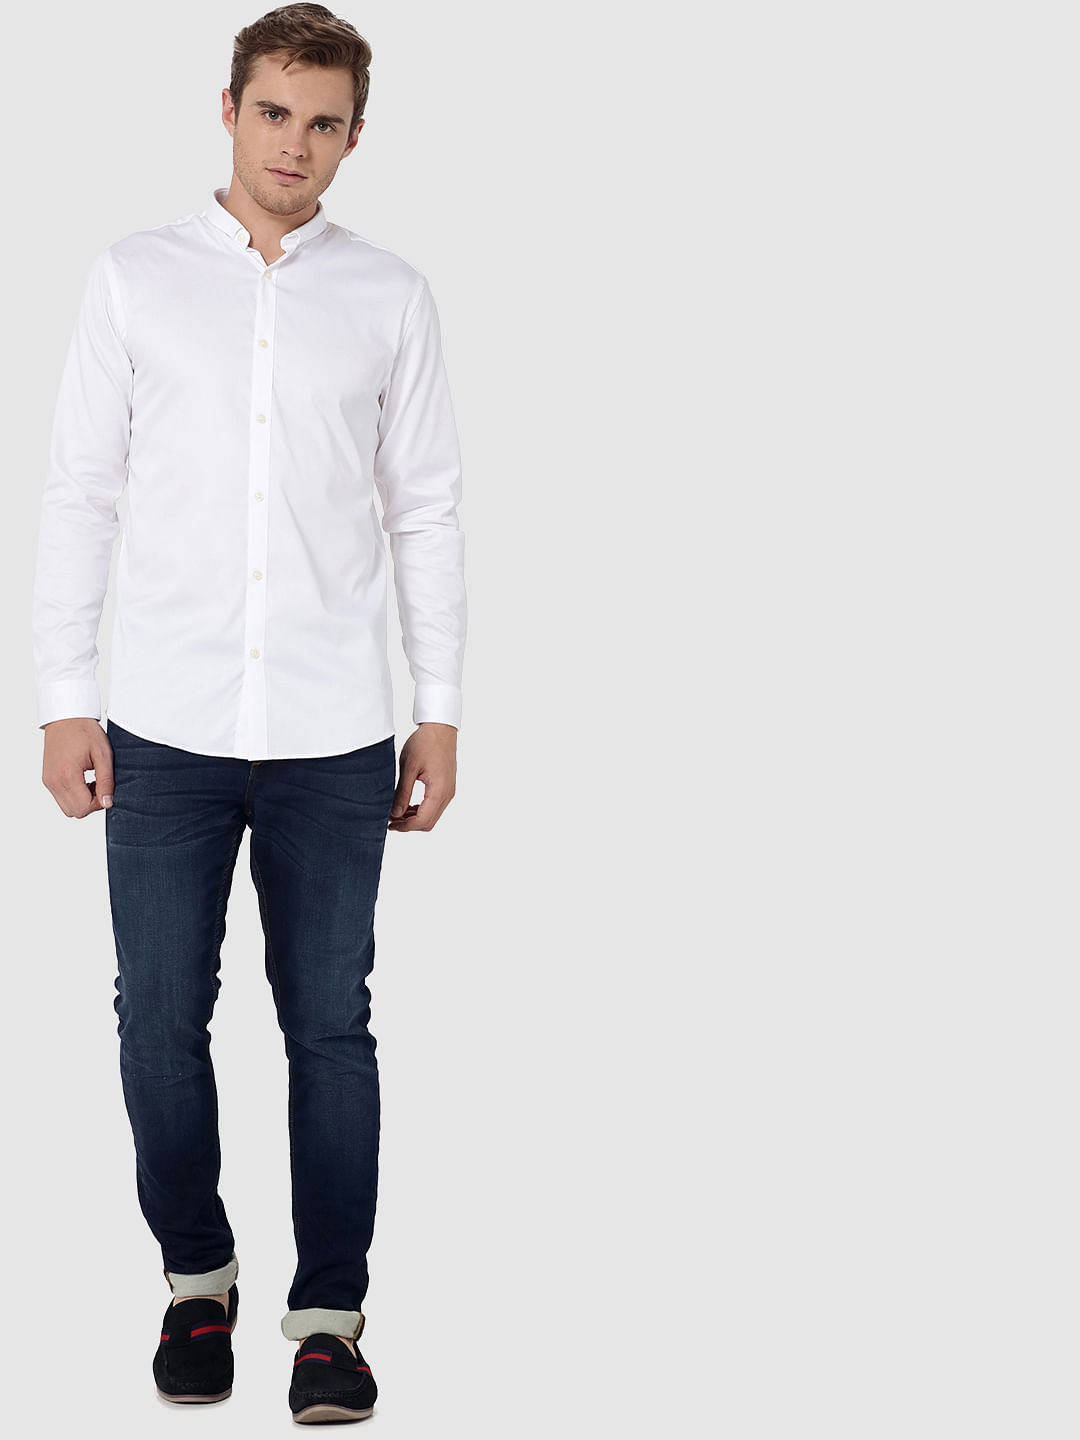 Shop Men's Kurtas, Tshirts, Shirts & Trousers Online|Romani|Nicobar